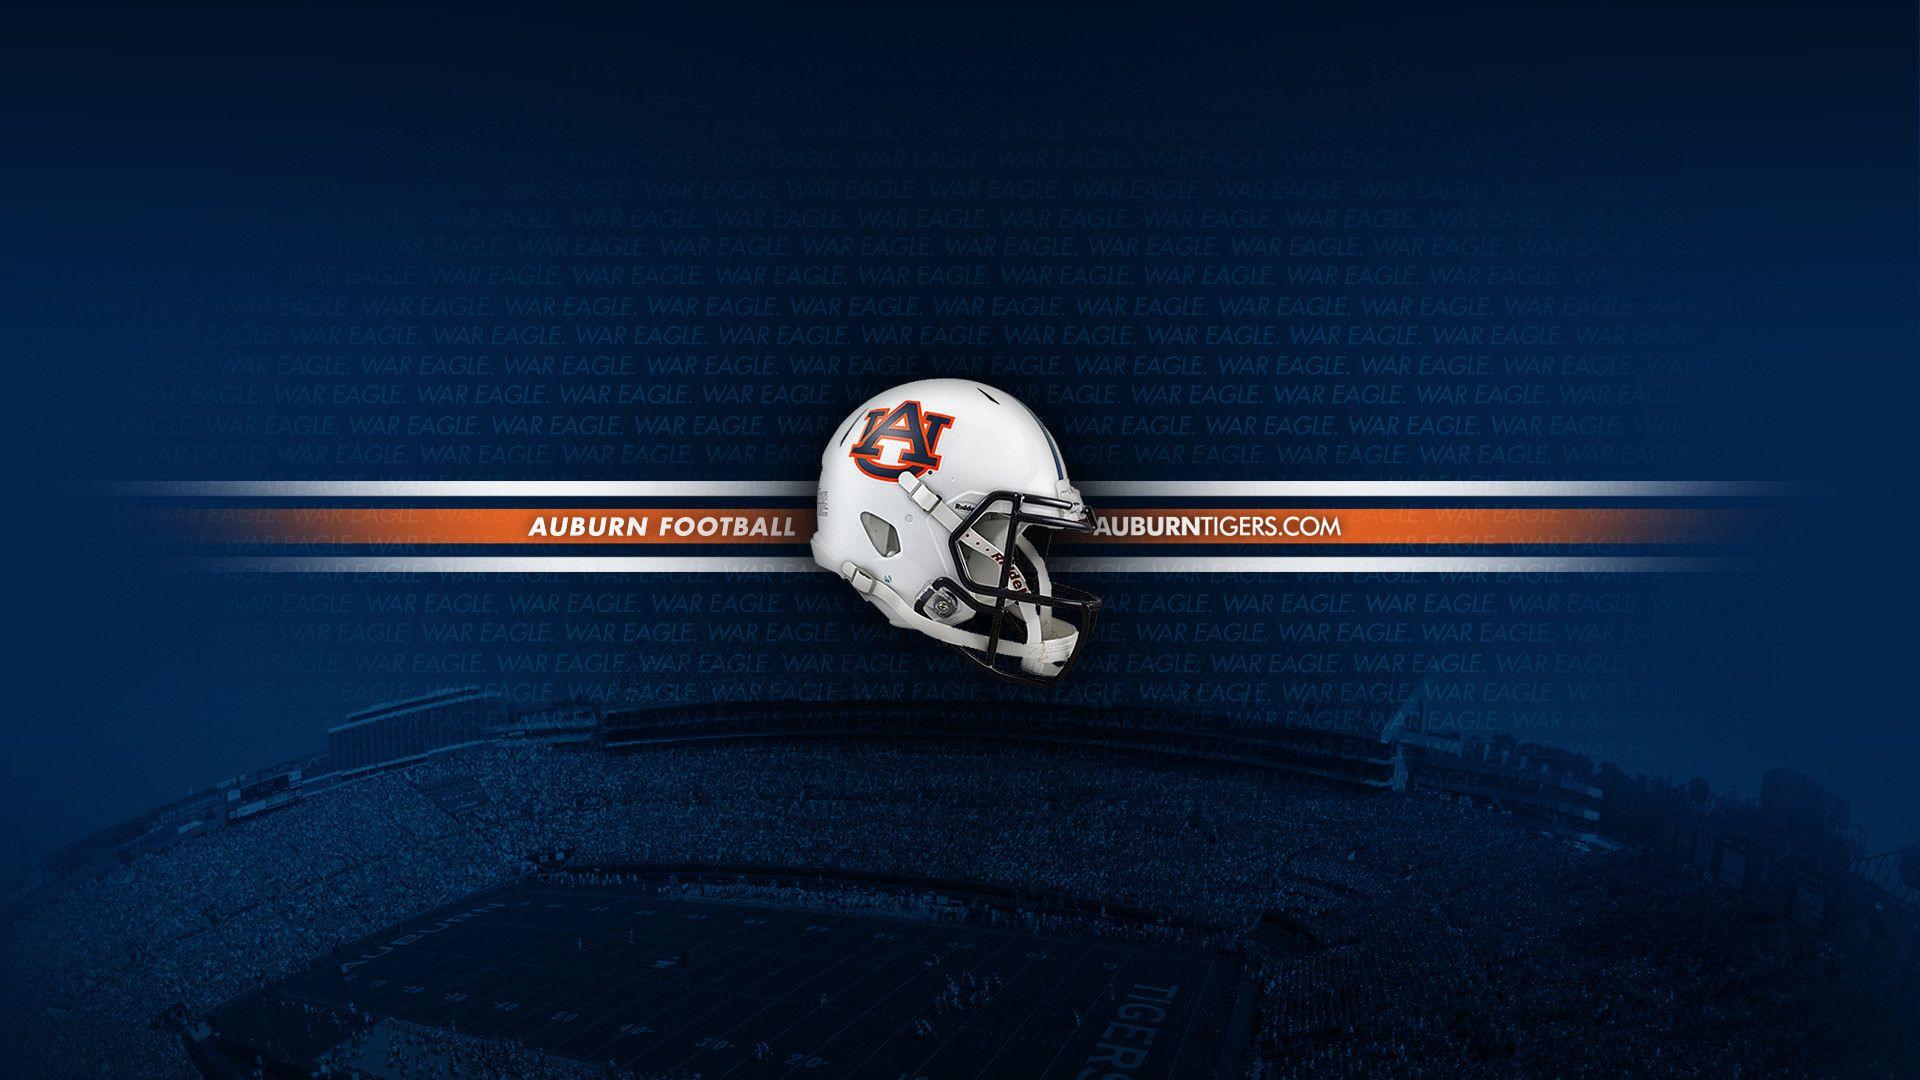 Video Conference Backgrounds  Auburn University Athletics